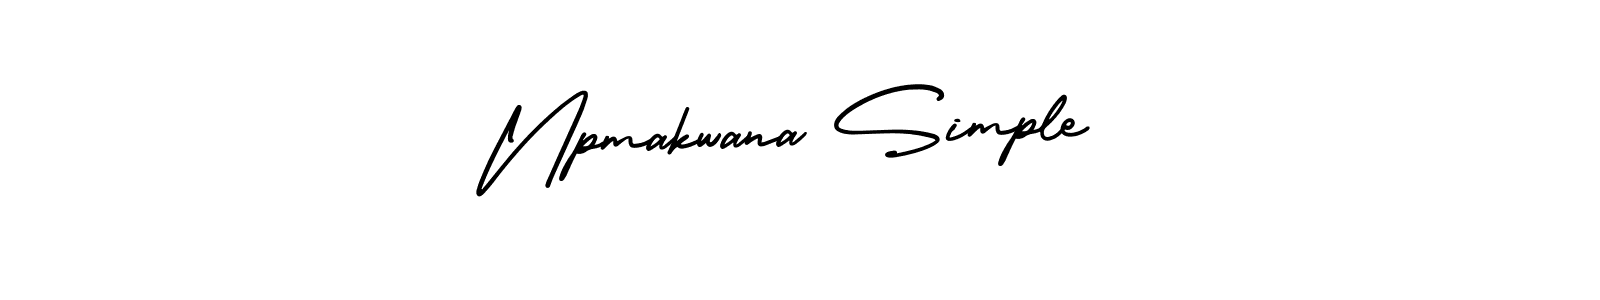 How to Draw Npmakwana Simple signature style? AmerikaSignatureDemo-Regular is a latest design signature styles for name Npmakwana Simple. Npmakwana Simple signature style 3 images and pictures png